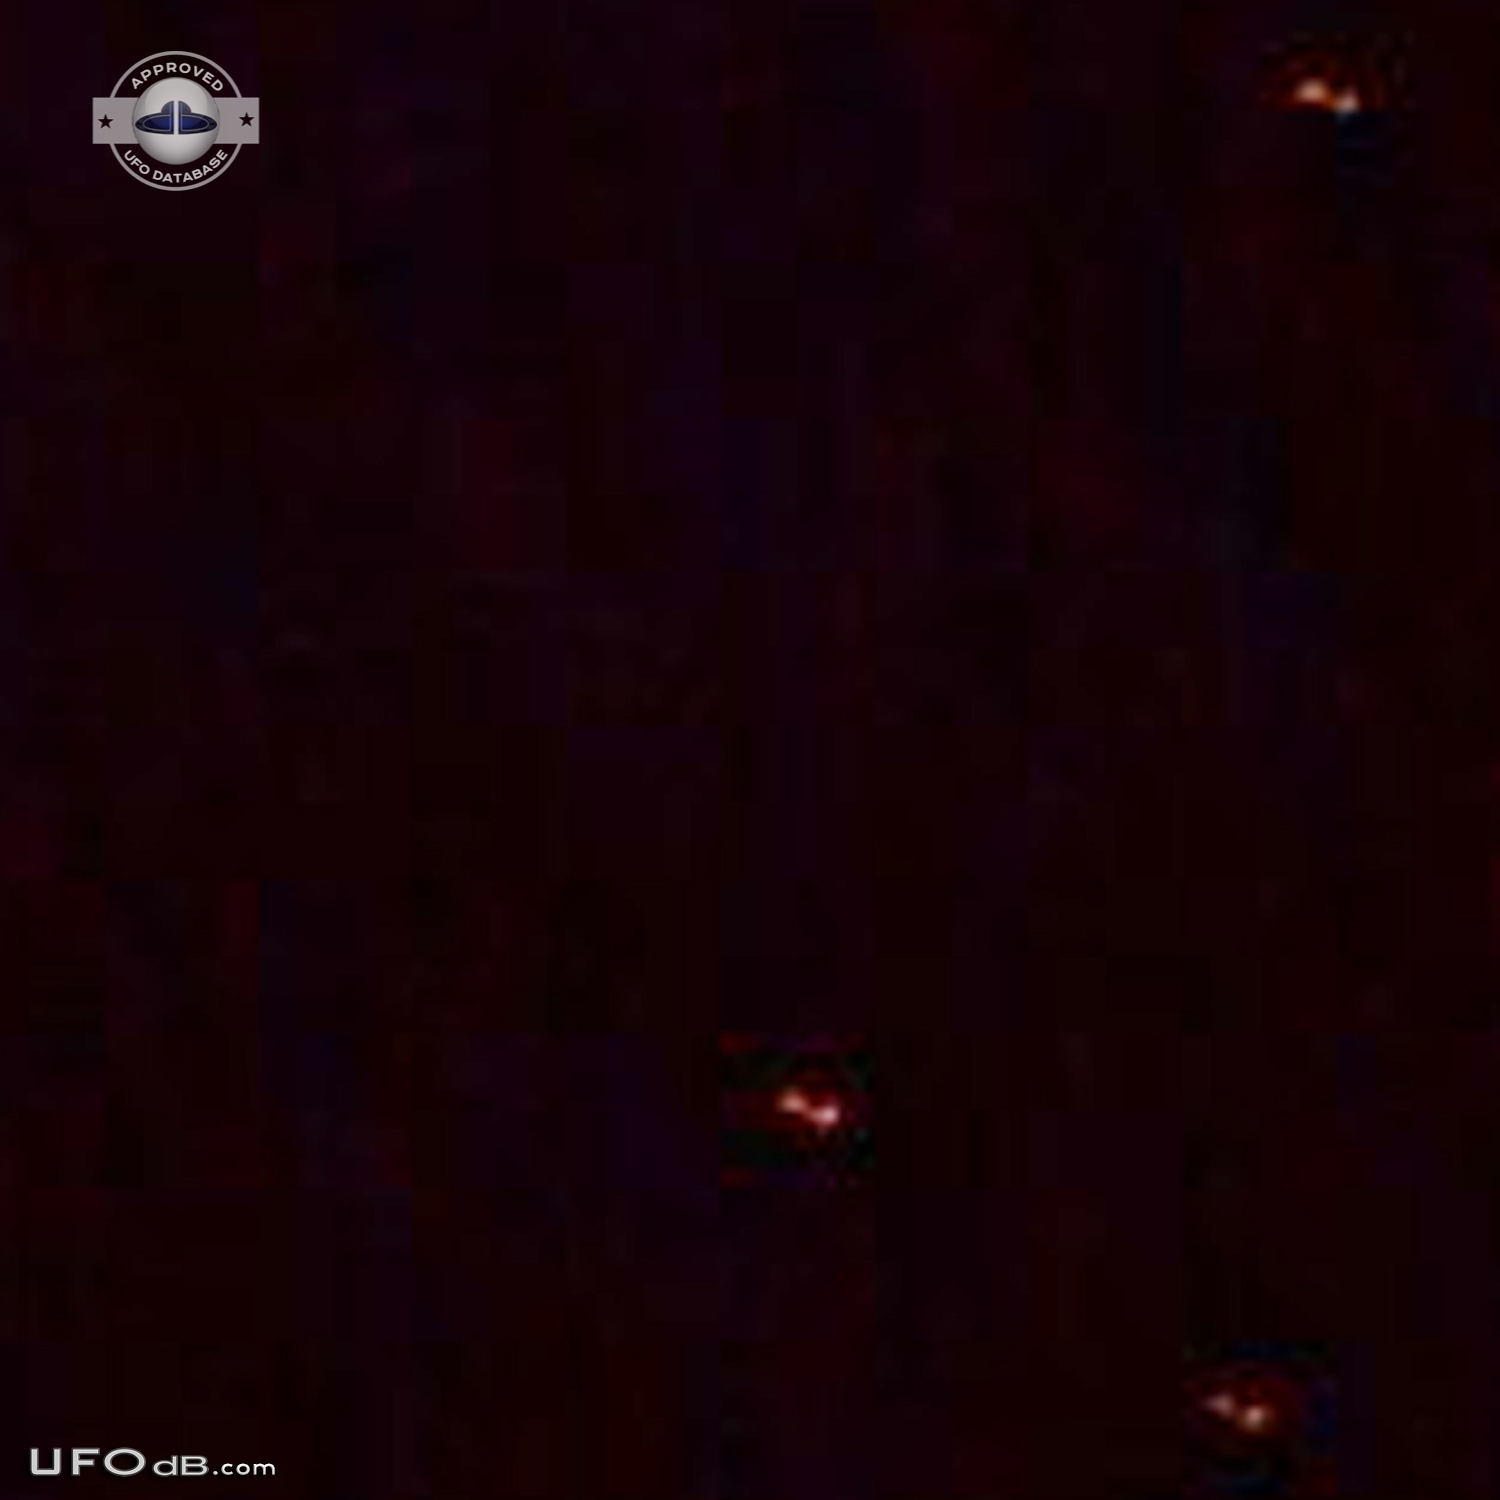 Fleet of 10 to 20 Orange UFOs seen in Sandusky, Ohio - Picture 2012 UFO Picture #427-2